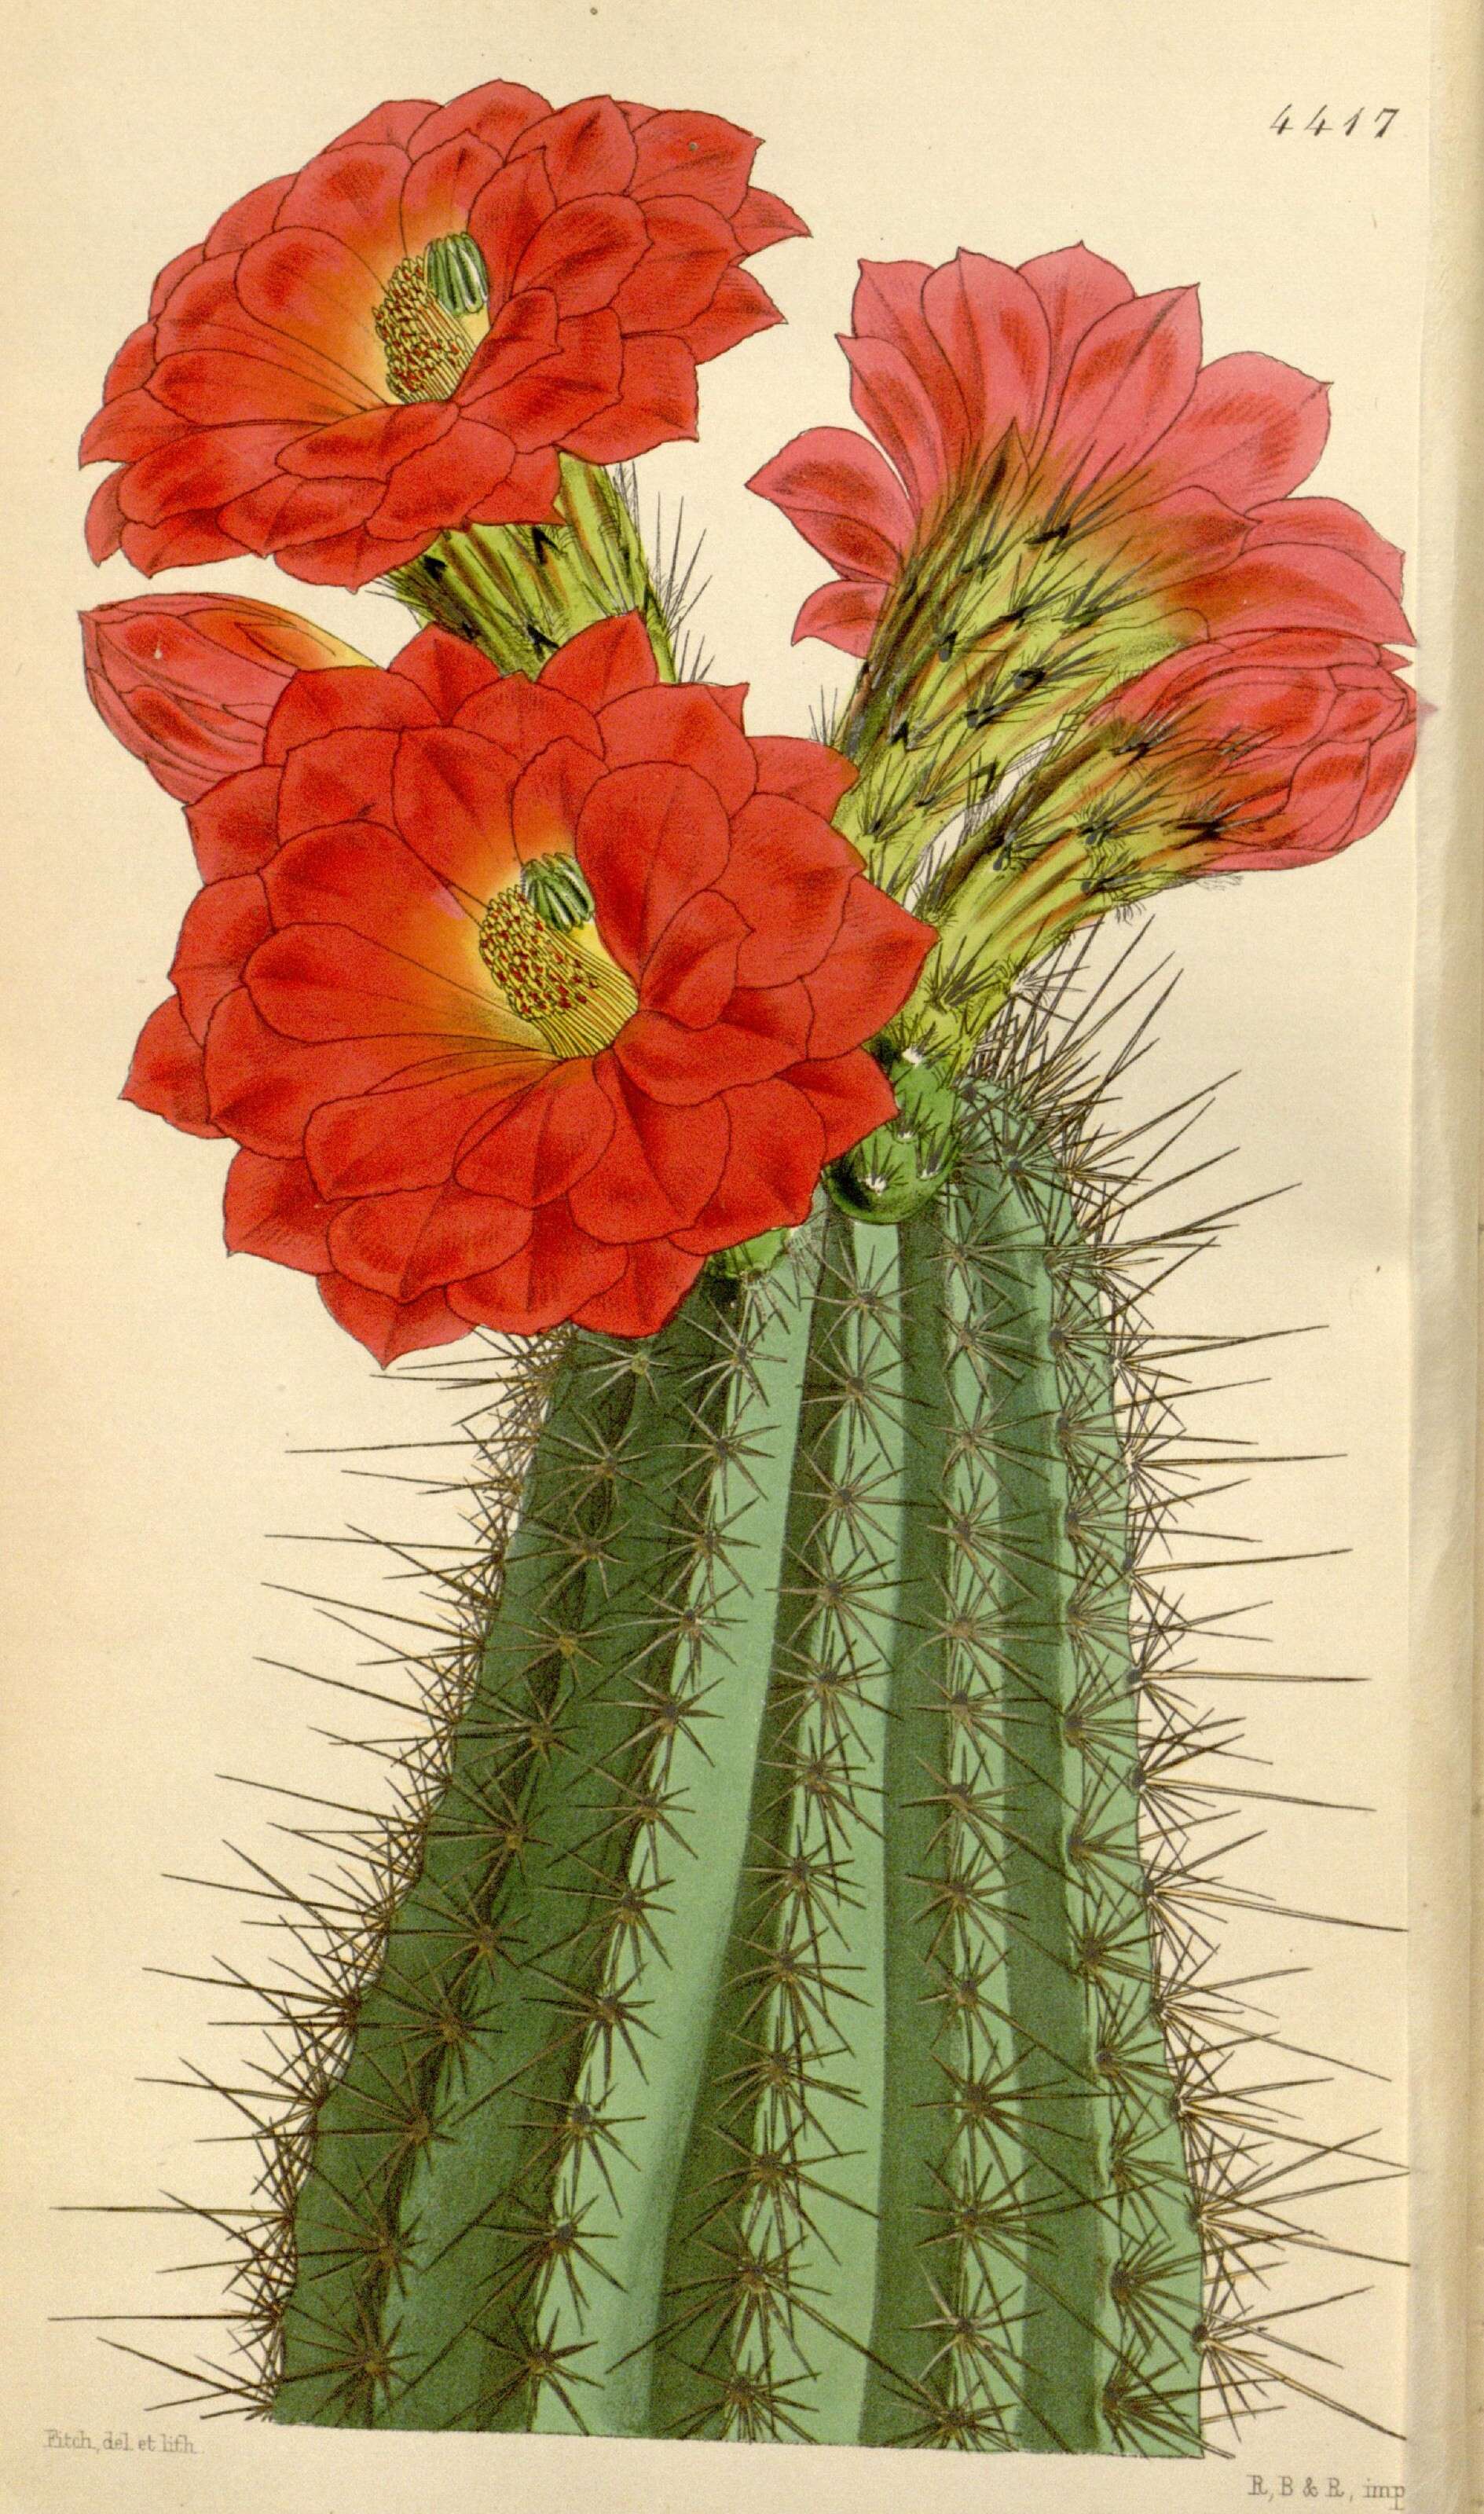 Image of Hedgehog Cactus